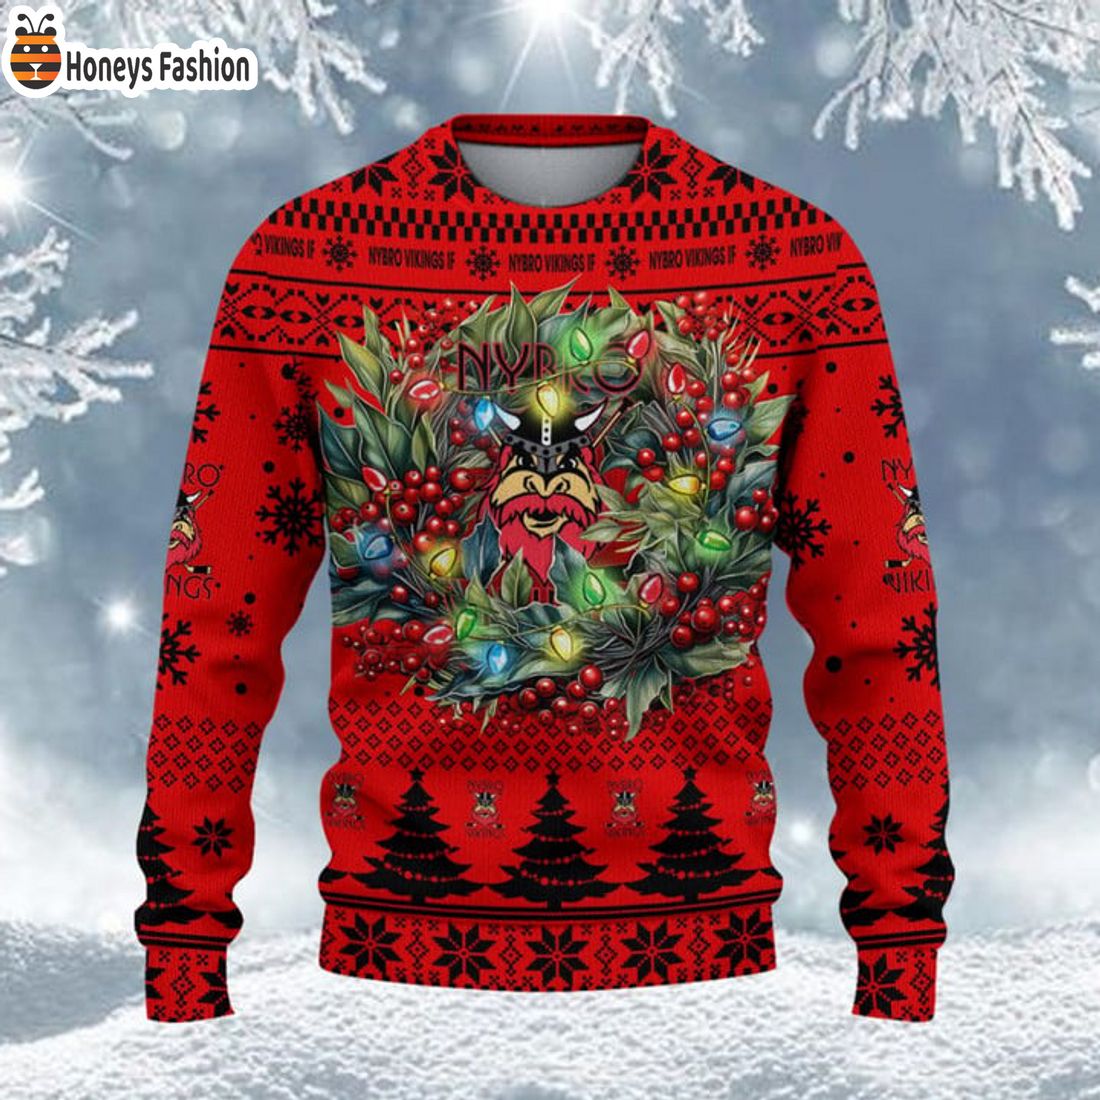 TRENDING Nybro Vikings IF SHL & HockeyAllsvenskan Ugly Christmas Sweater